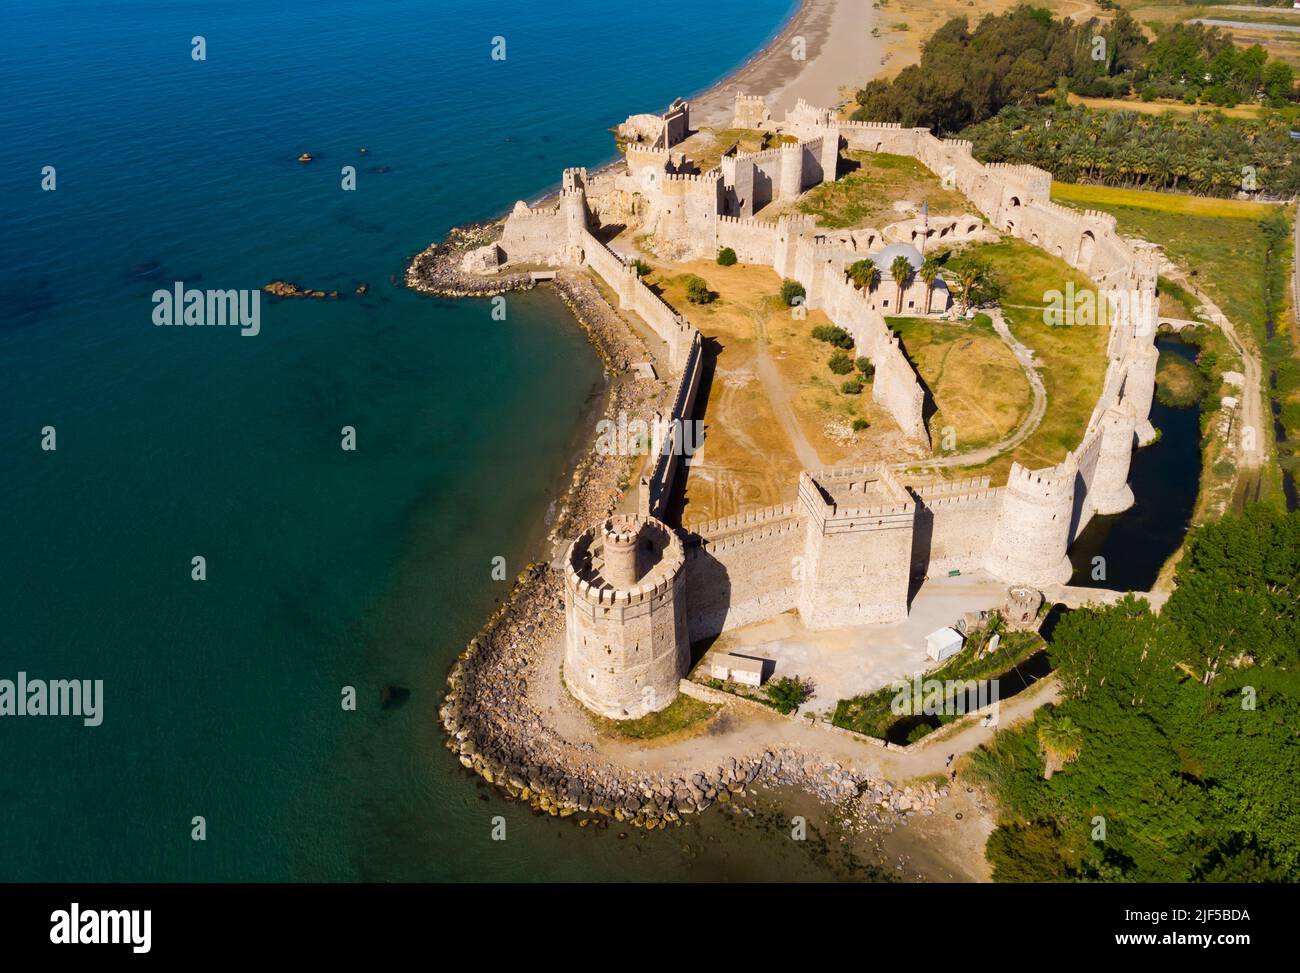 Aerial view of ancient Mamure Castle on Mediterranean coast, Turkey Stock Photo